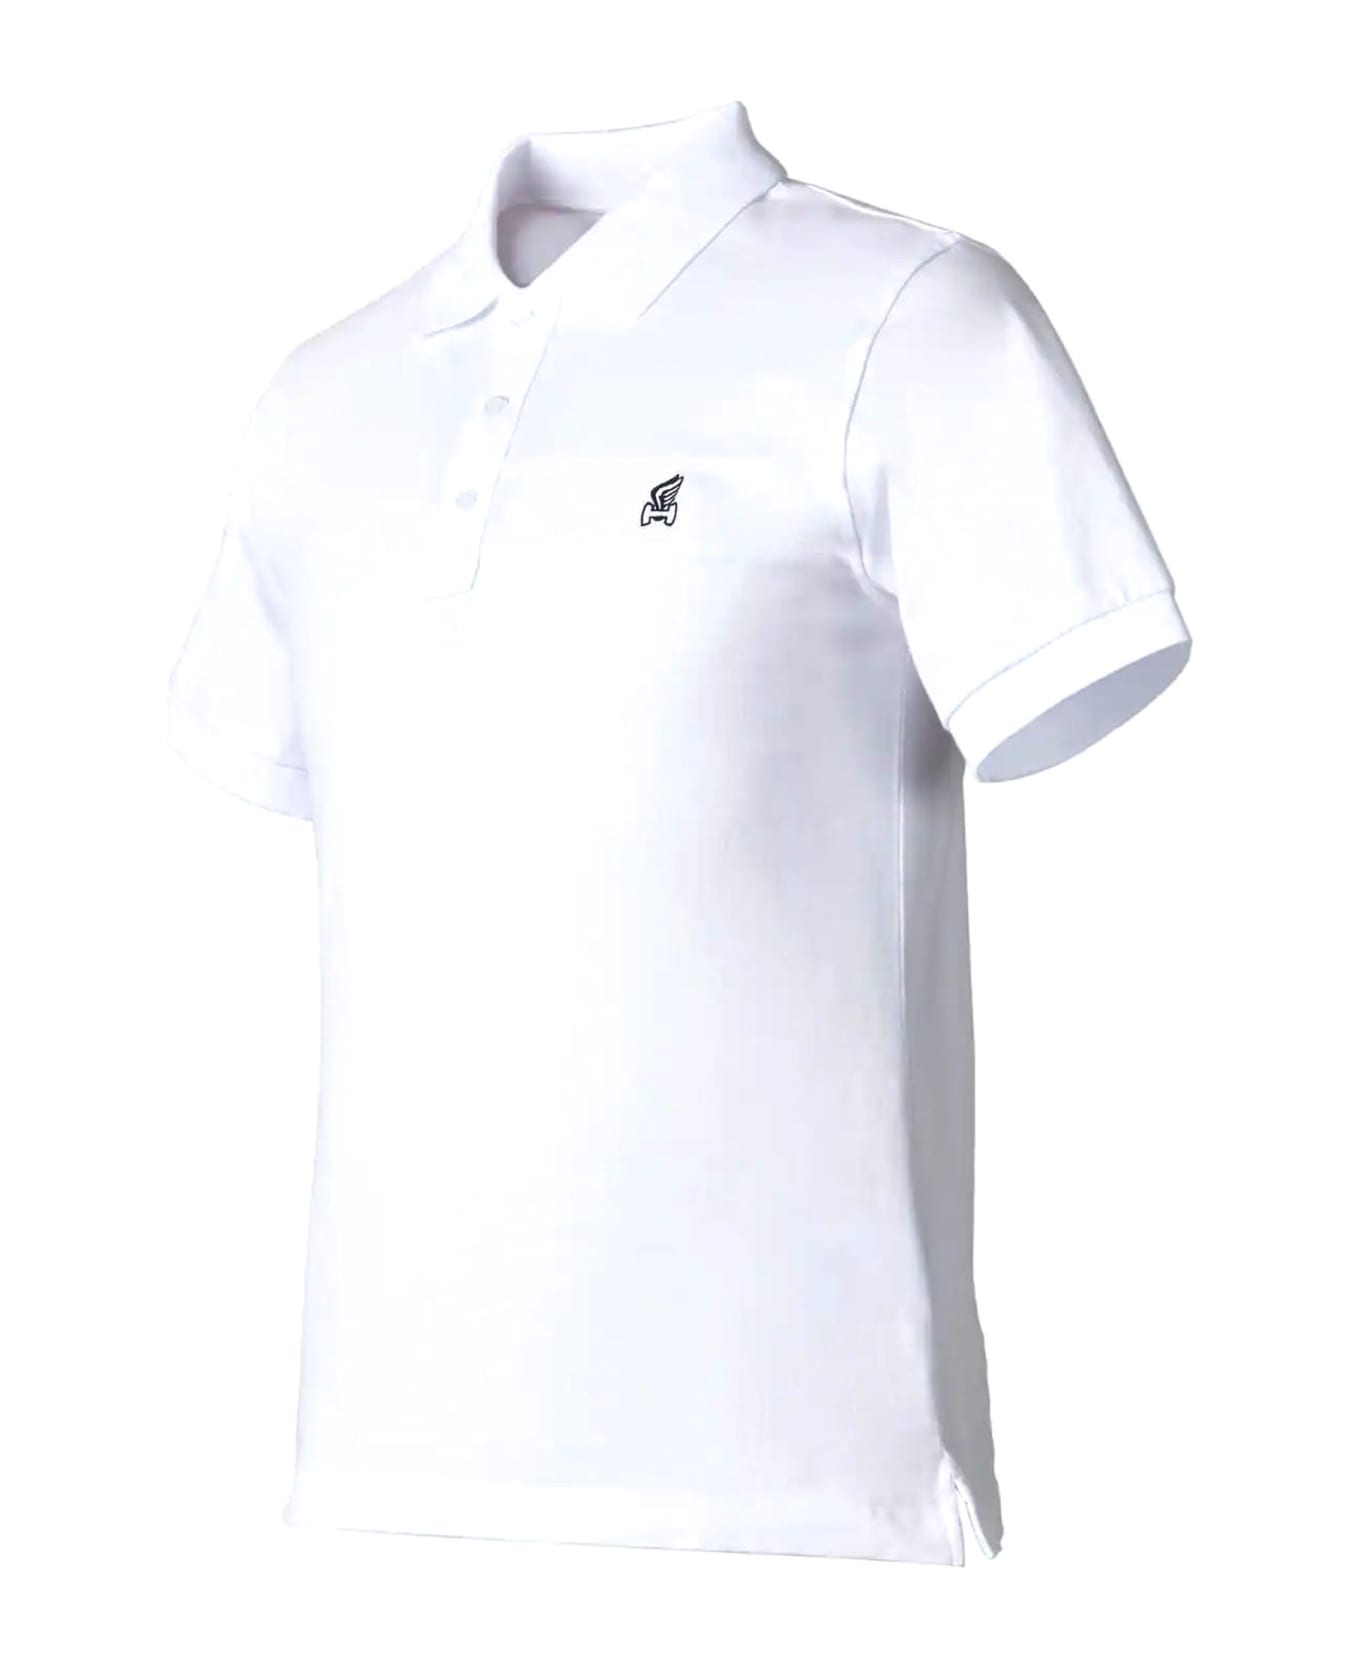 Hogan White Cotton Polo Shirt - Bianco ポロシャツ